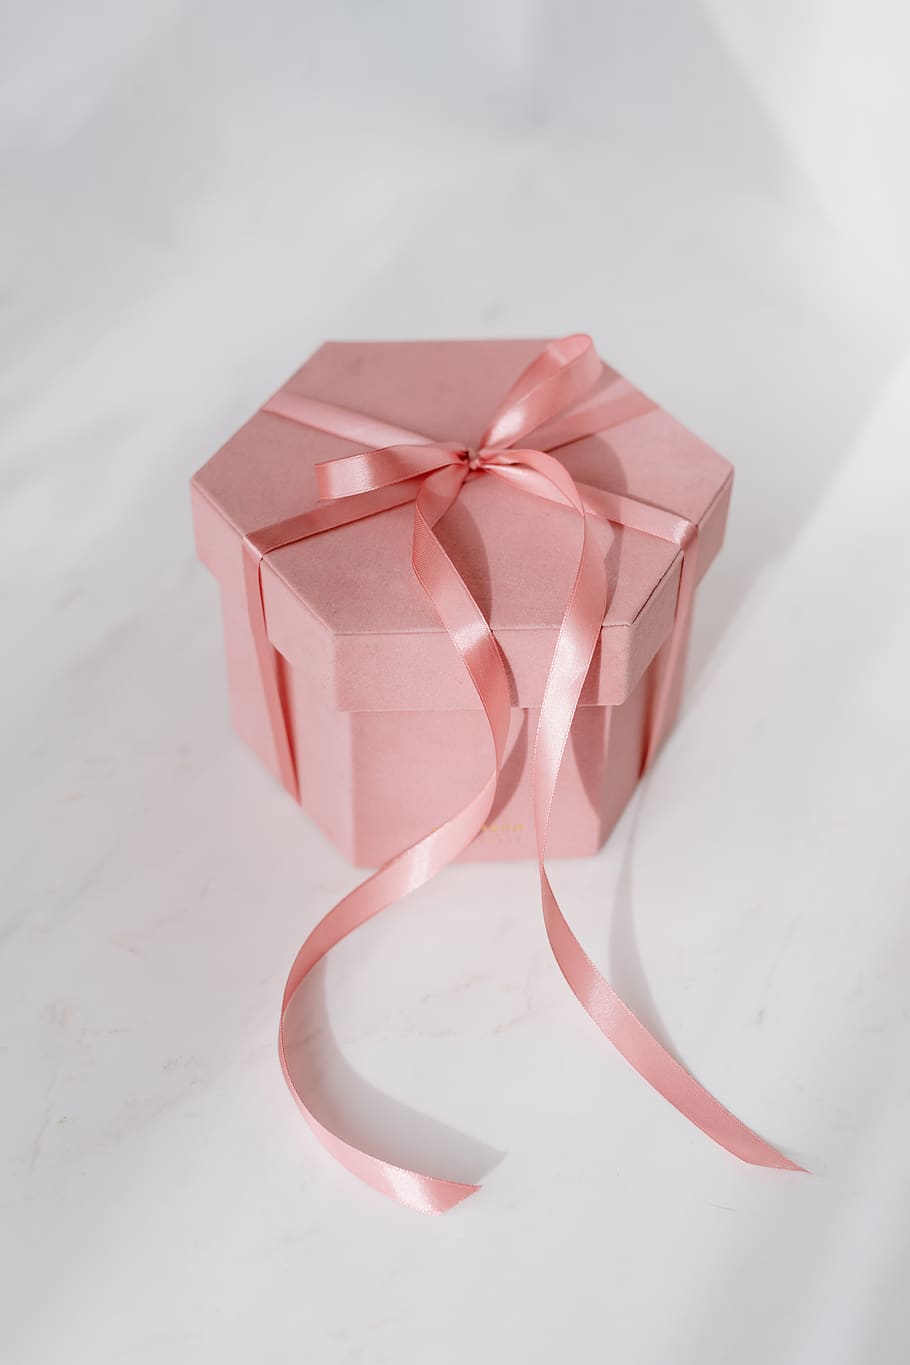 regalo, caja, rosa, seda, sedoso, terciopelo, cinta, lazo, lindo, dulce